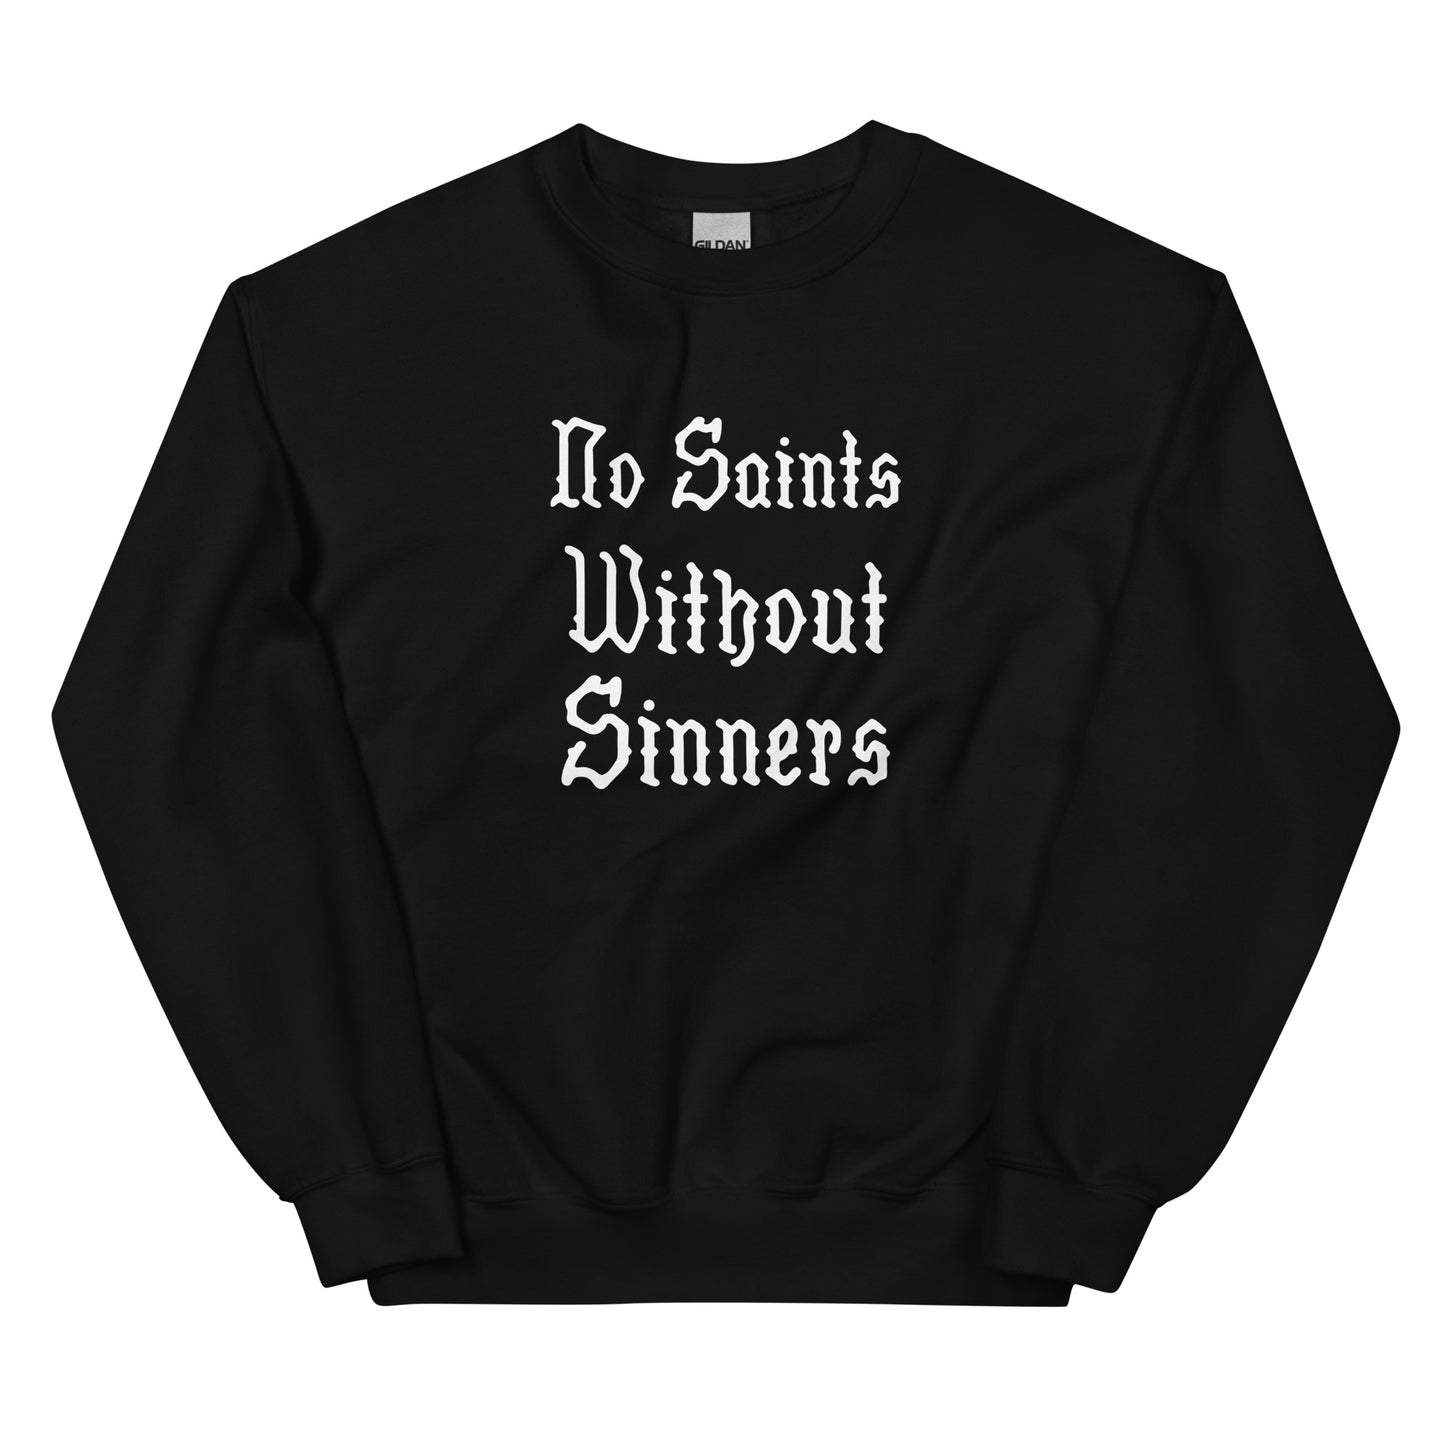 No Saints Without Sinners Unisex Sweatshirt